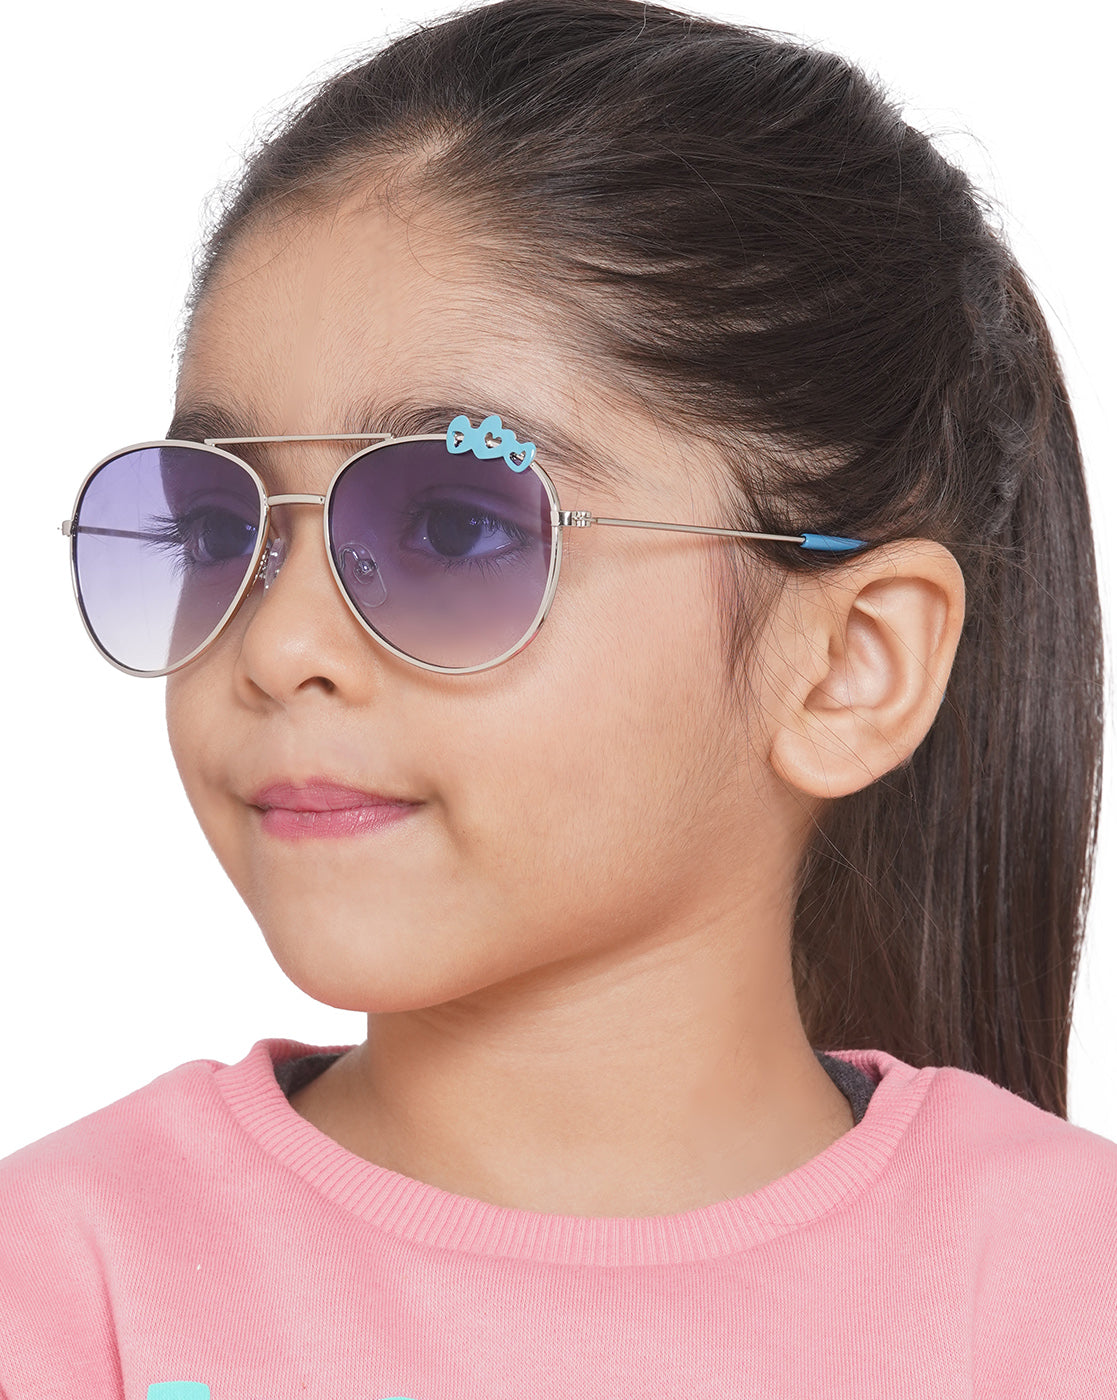 Carlton London Purple Lens &amp; Silver-Toned Aviator Sunglasses With Uv Protected Lens For Girl